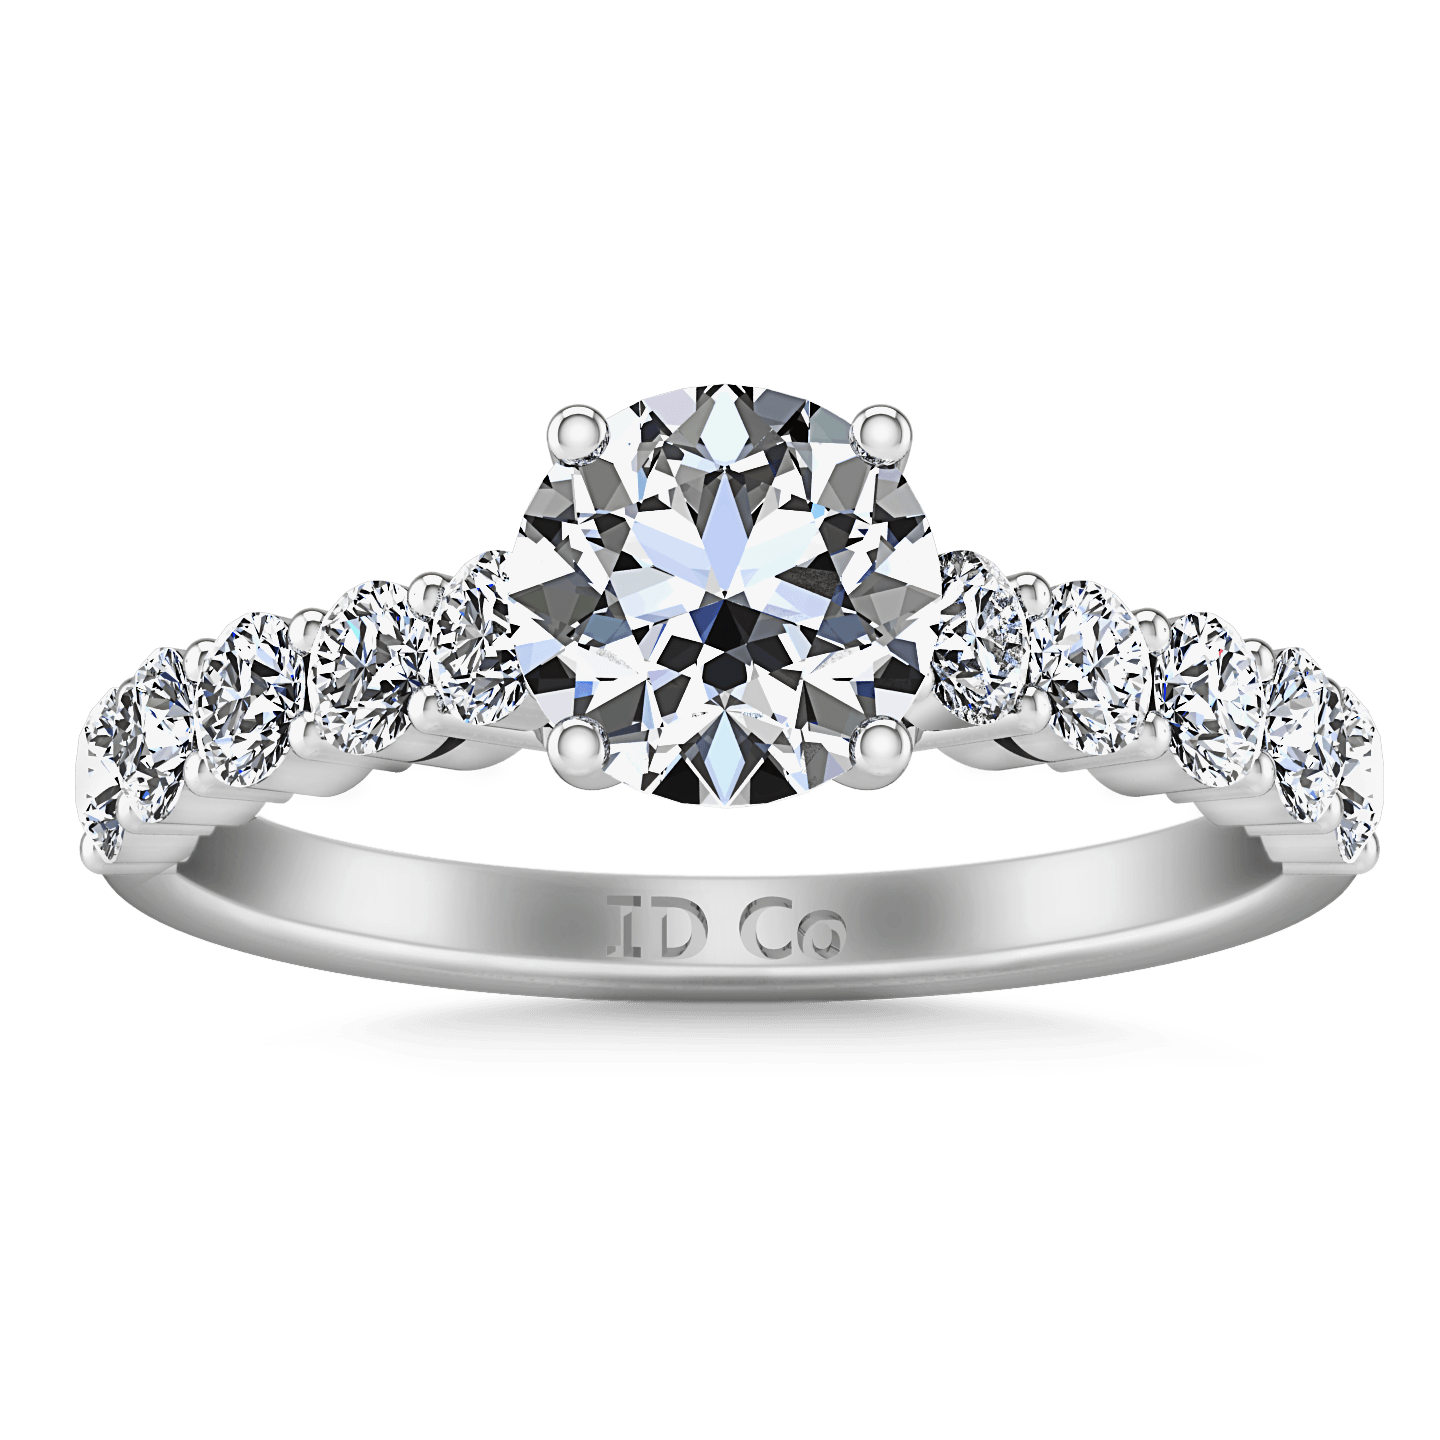 Round Diamond Pave Engagement Ring Grande 14K White Gold engagement rings imaginediamonds 